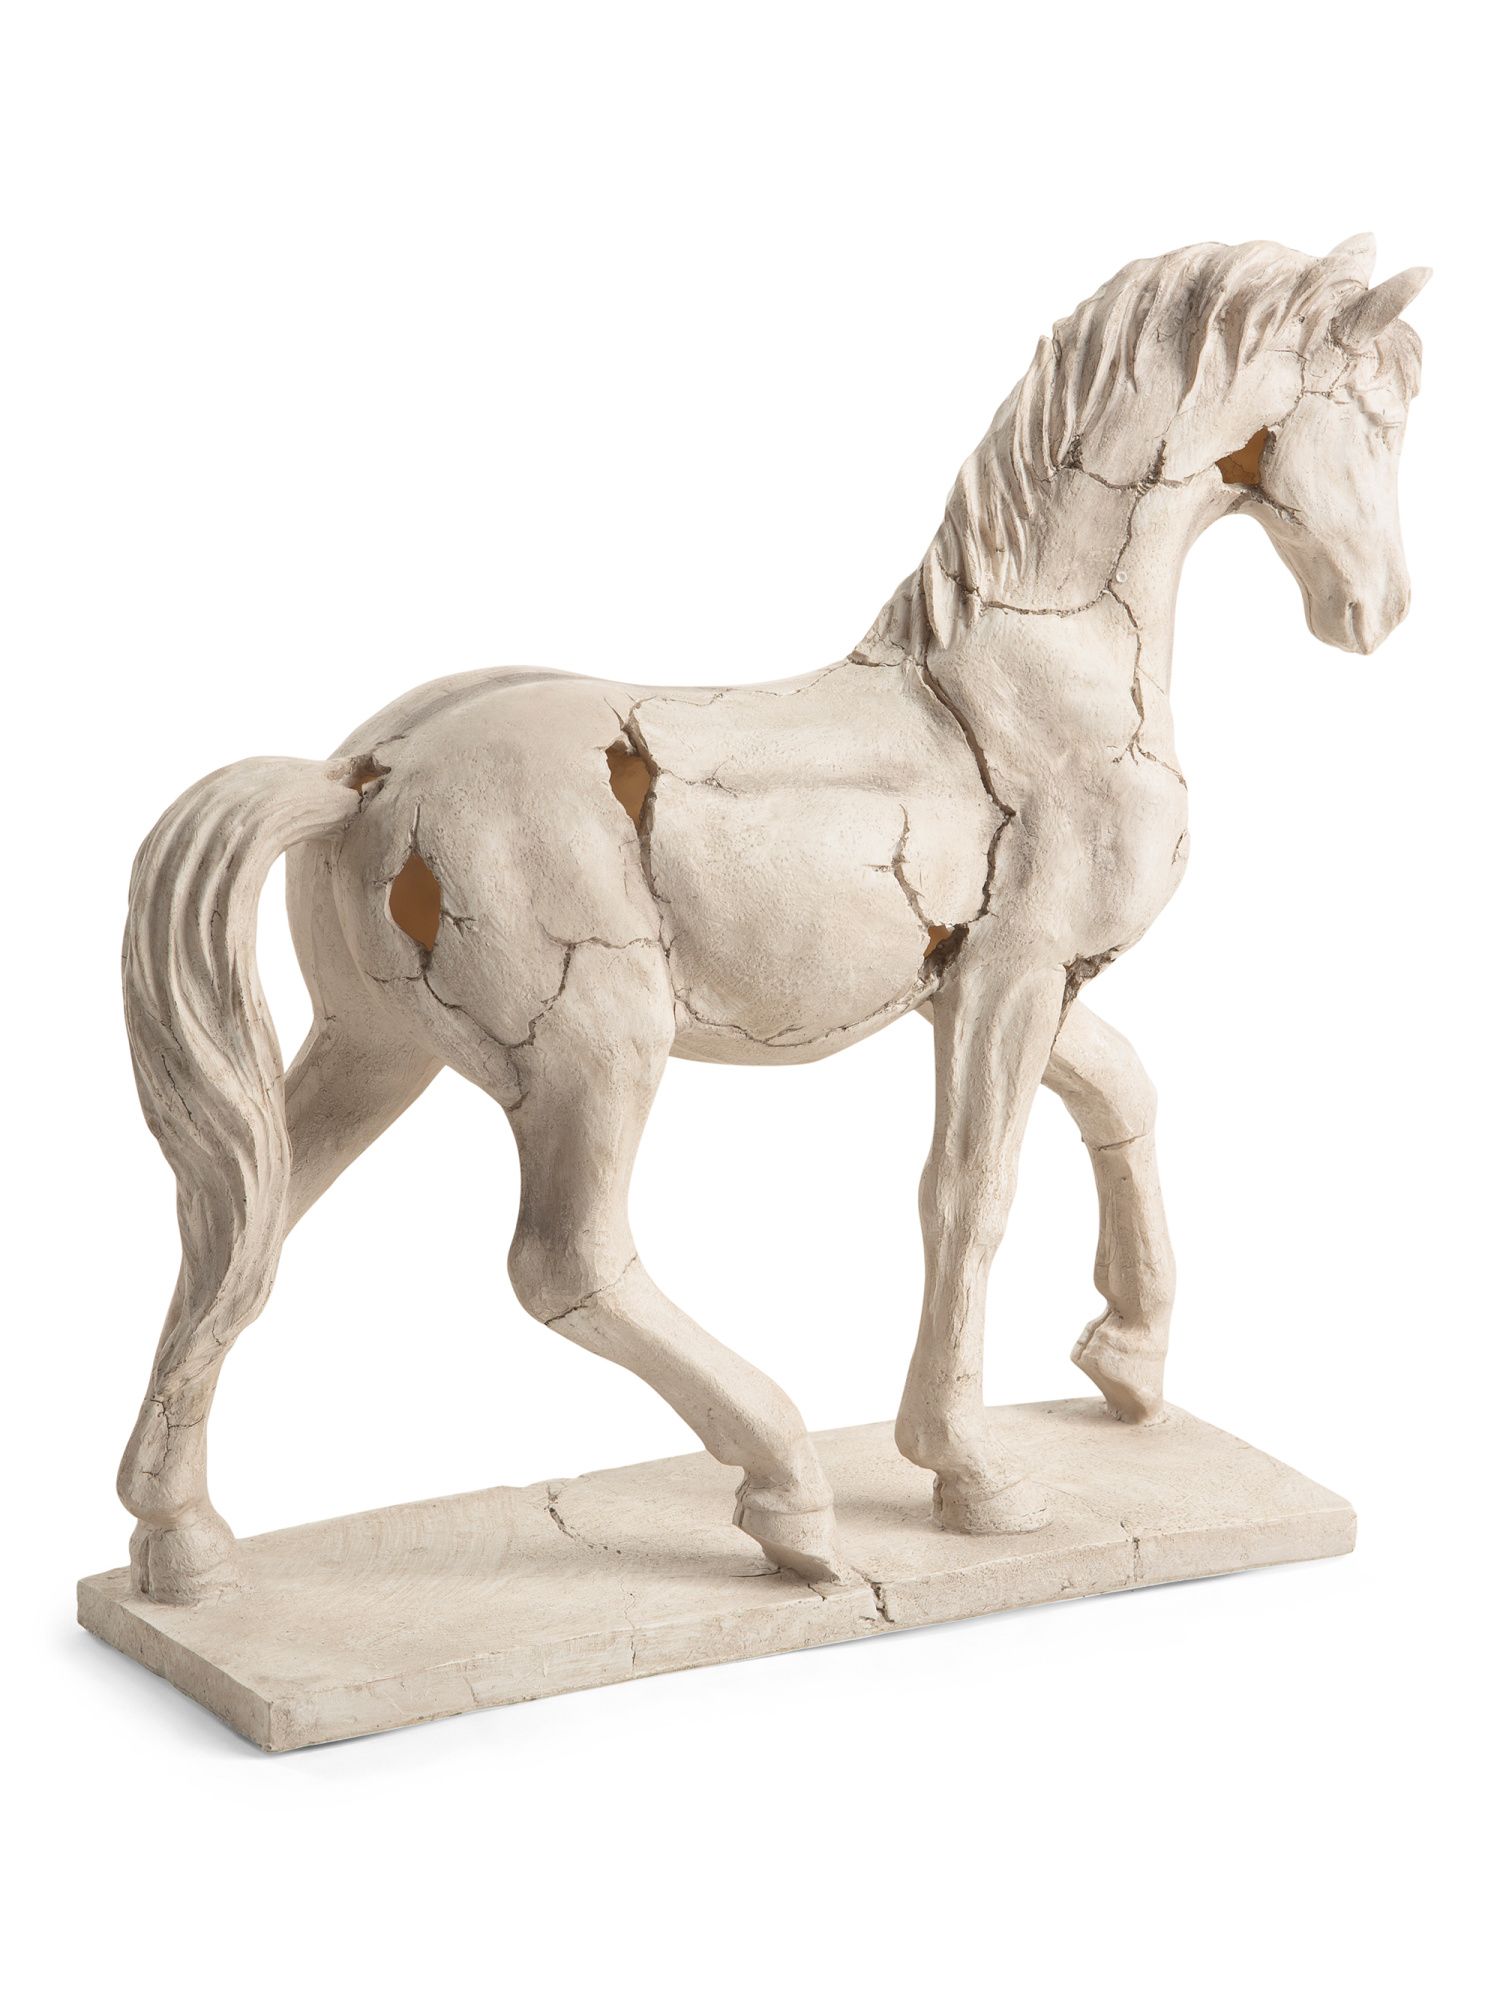 Cracked Horse Sculpture | Decor | Marshalls | Marshalls